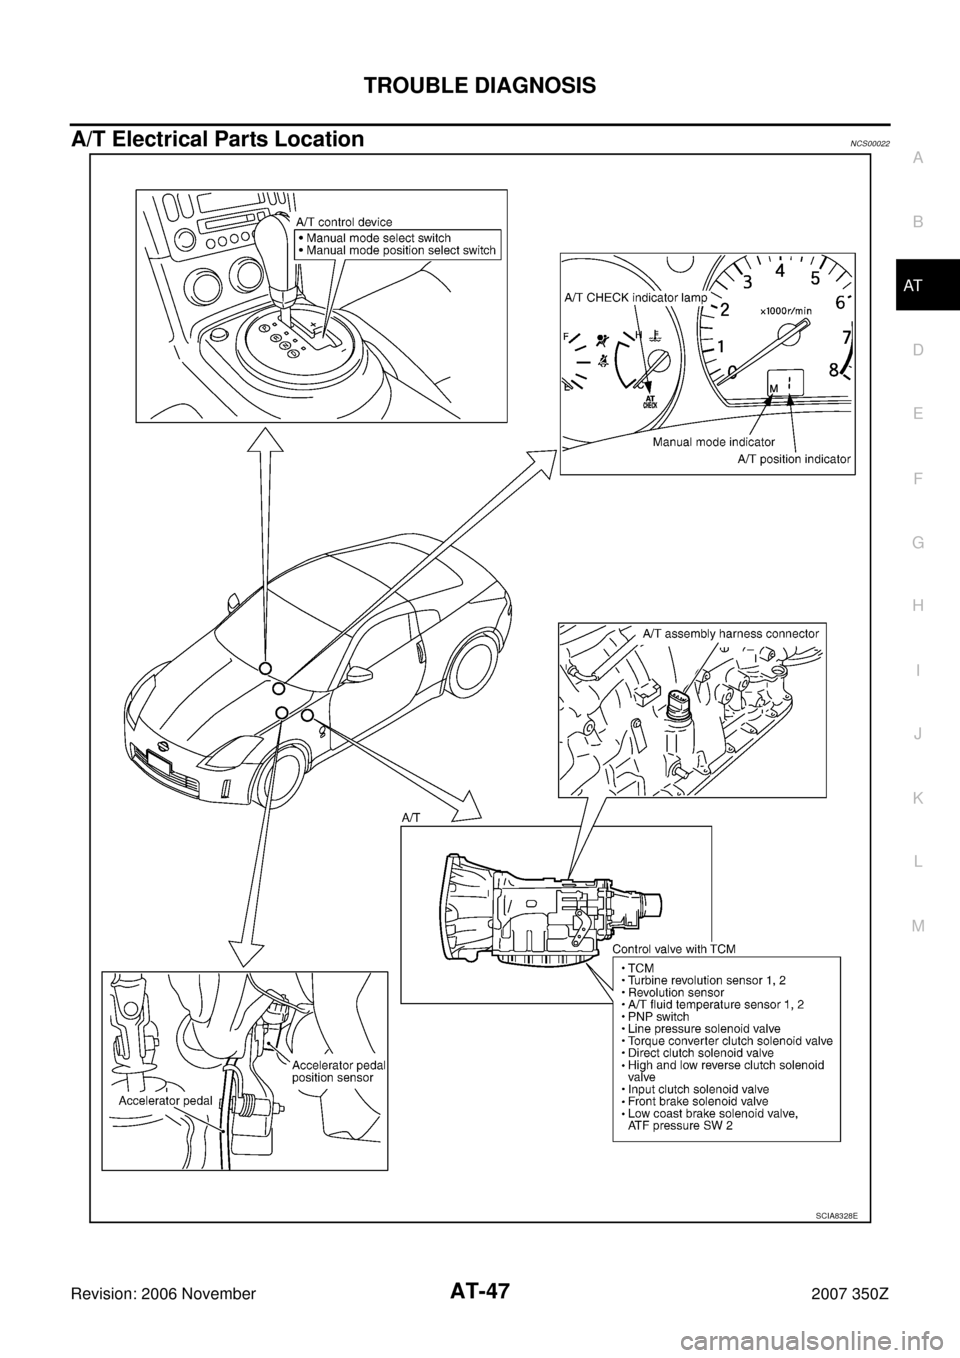 NISSAN 350Z 2007 Z33 Automatic Transmission Service Manual TROUBLE DIAGNOSIS
AT-47
D
E
F
G
H
I
J
K
L
MA
B
AT
Revision: 2006 November2007 350Z
A/T Electrical Parts LocationNCS00022
SCIA8328E 